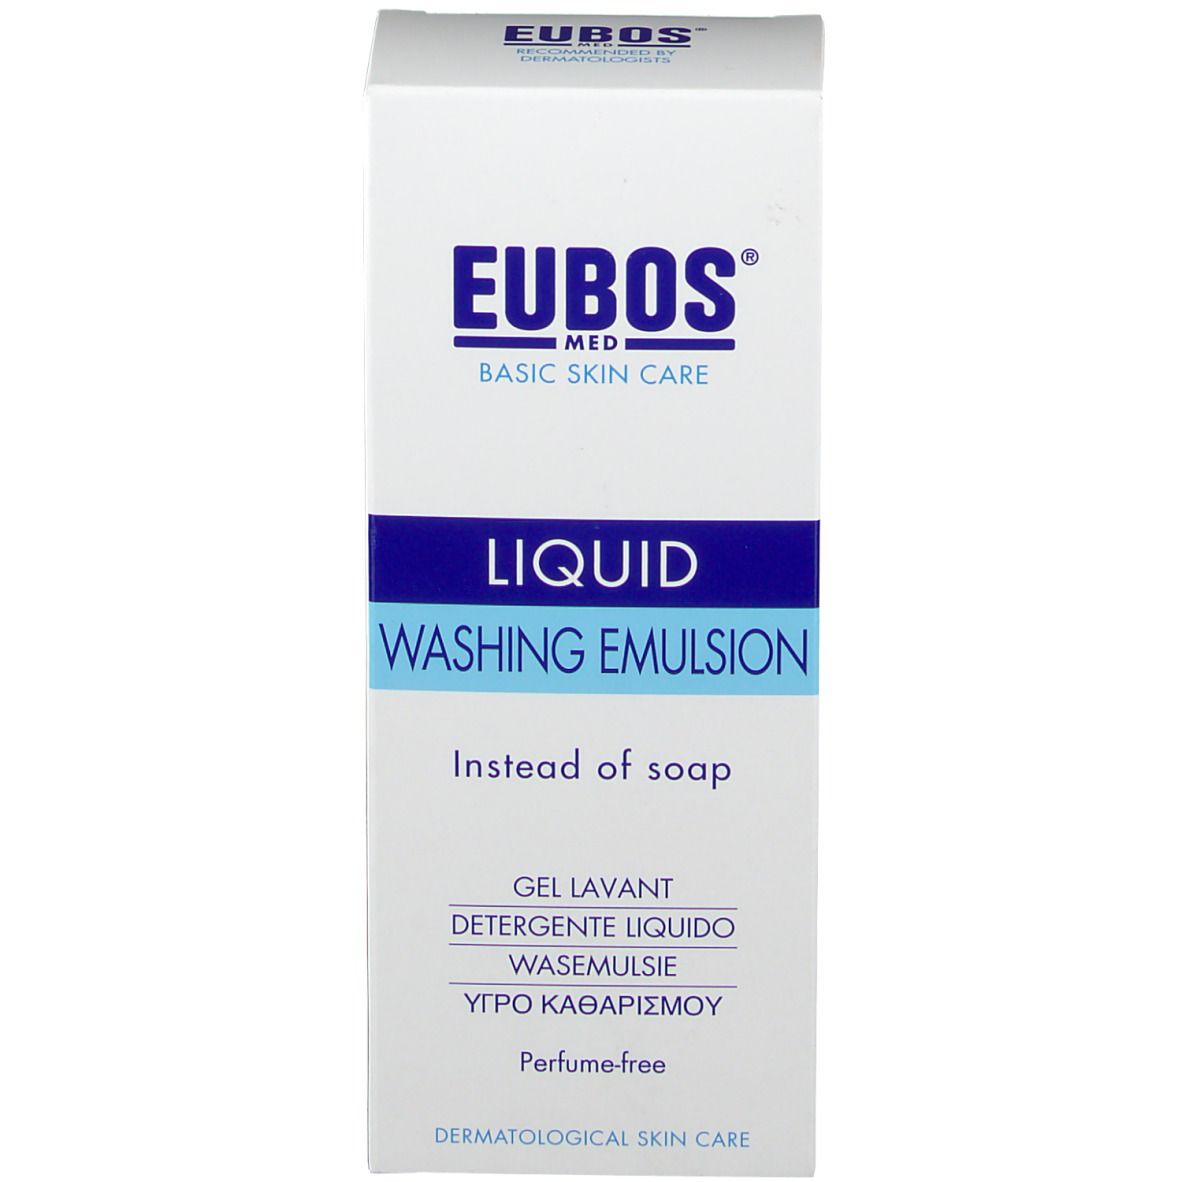 Eubos® Detergente Liquido